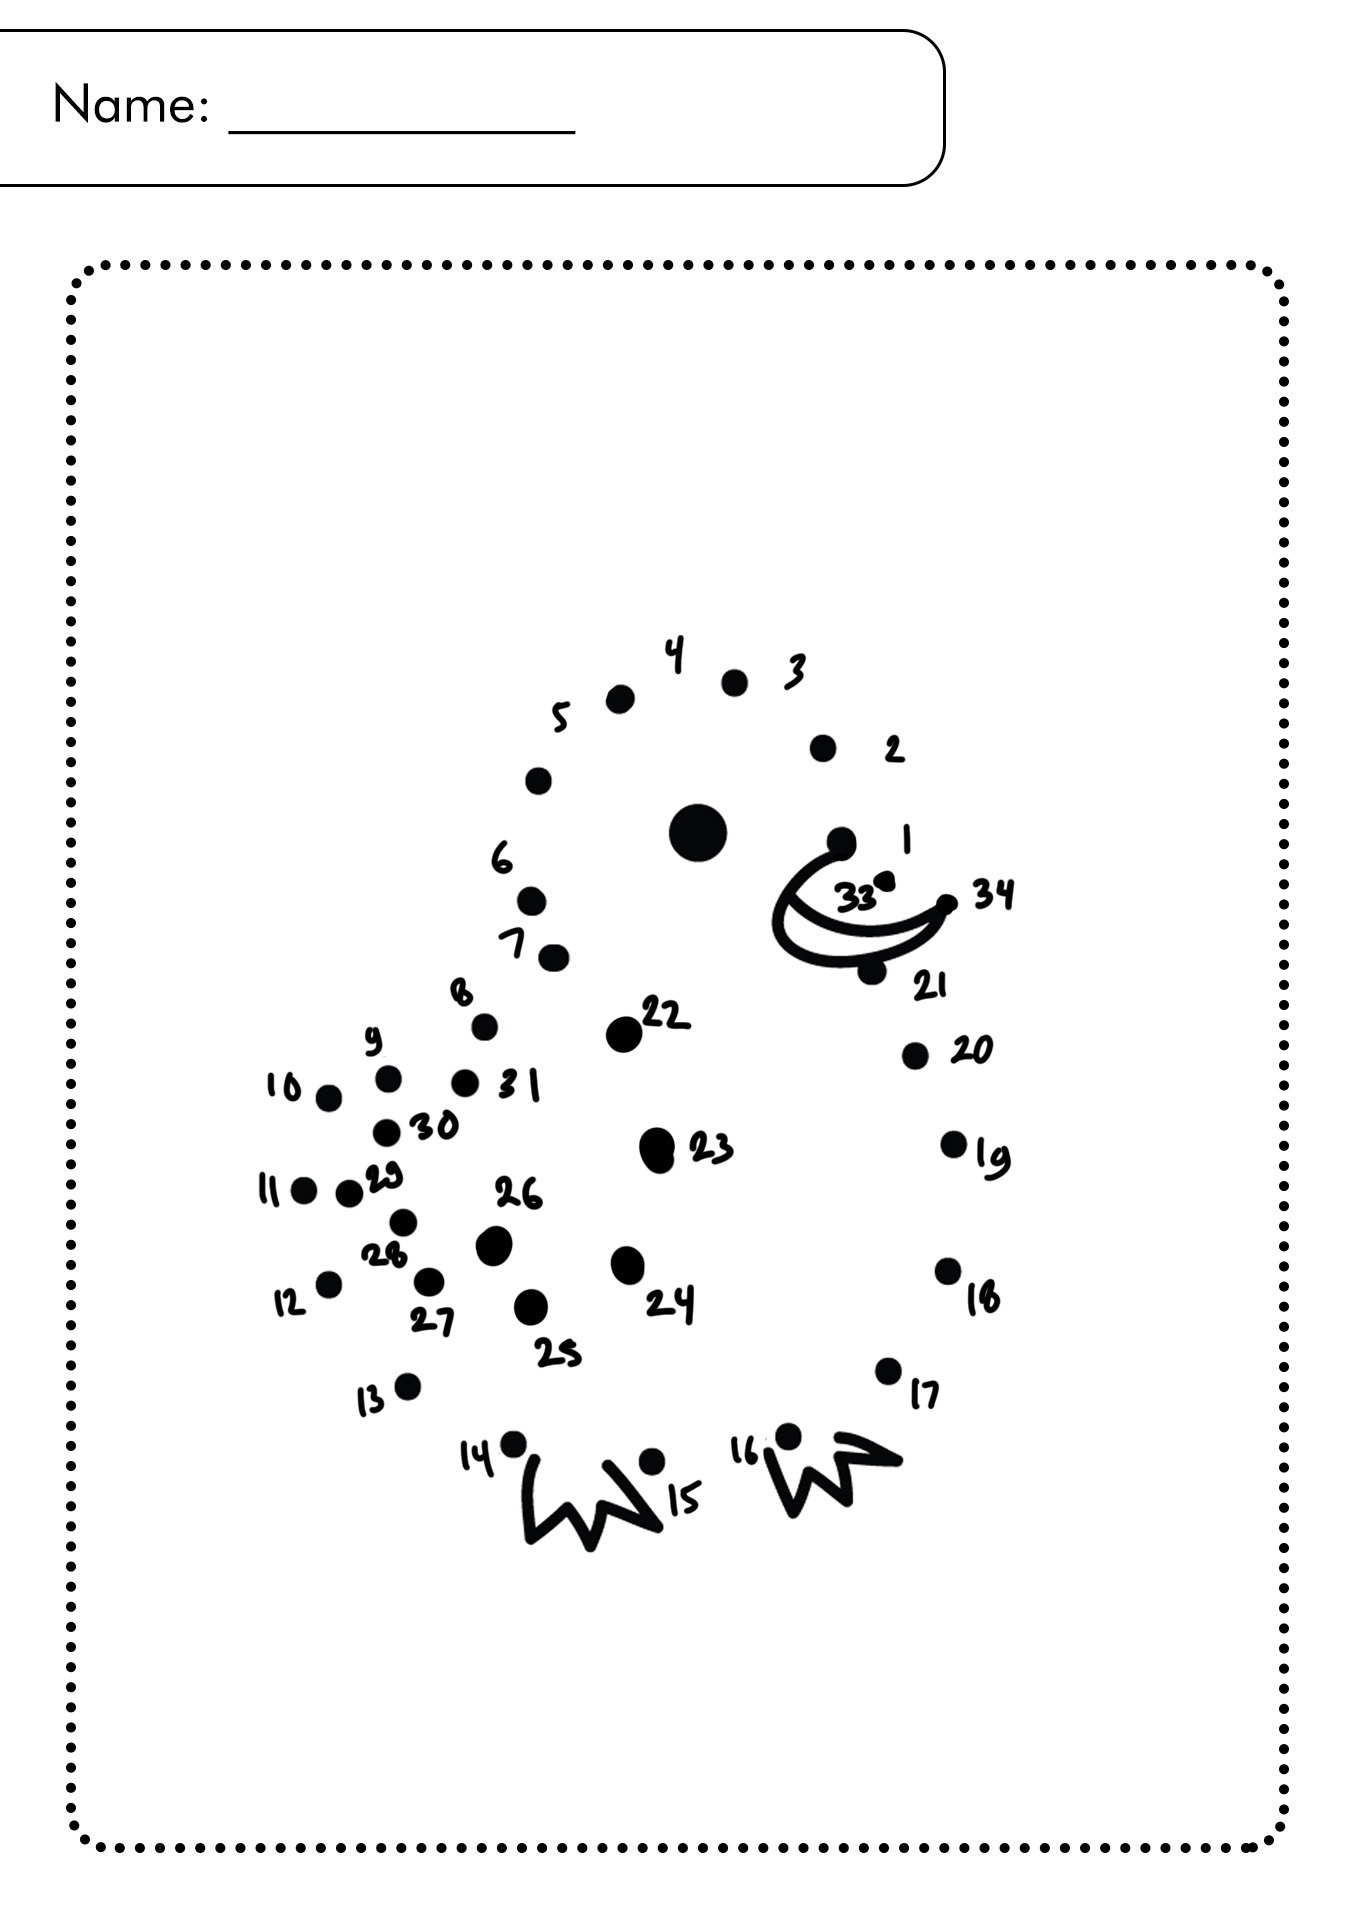 Free Dot to Dot Worksheets for Preschoolers Image